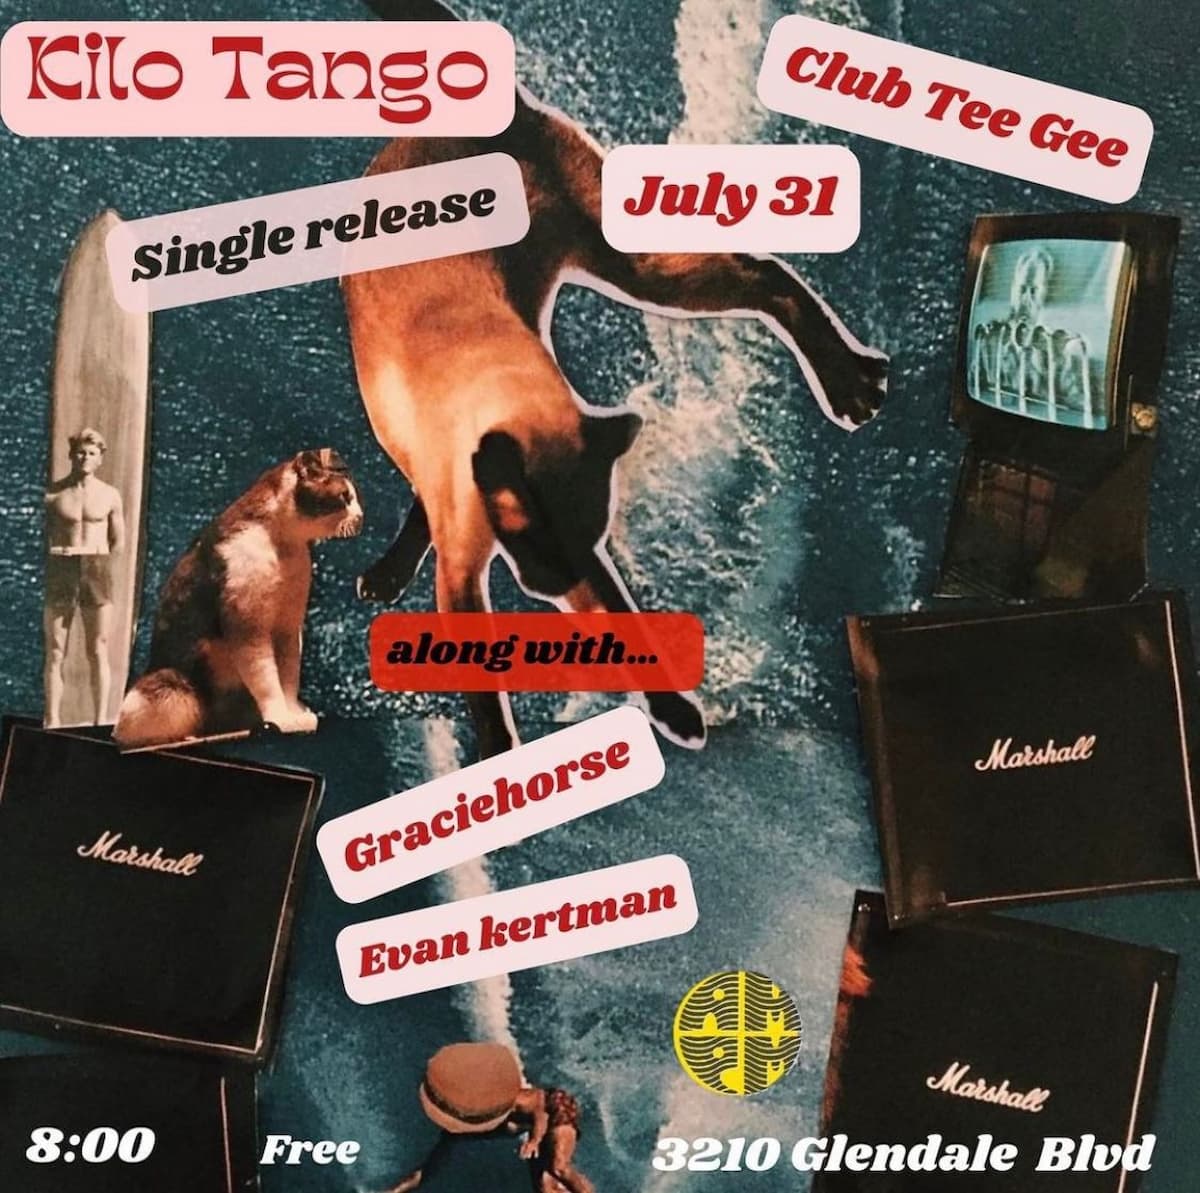 Kilo Tango / Graciehorse / Evan Kertman